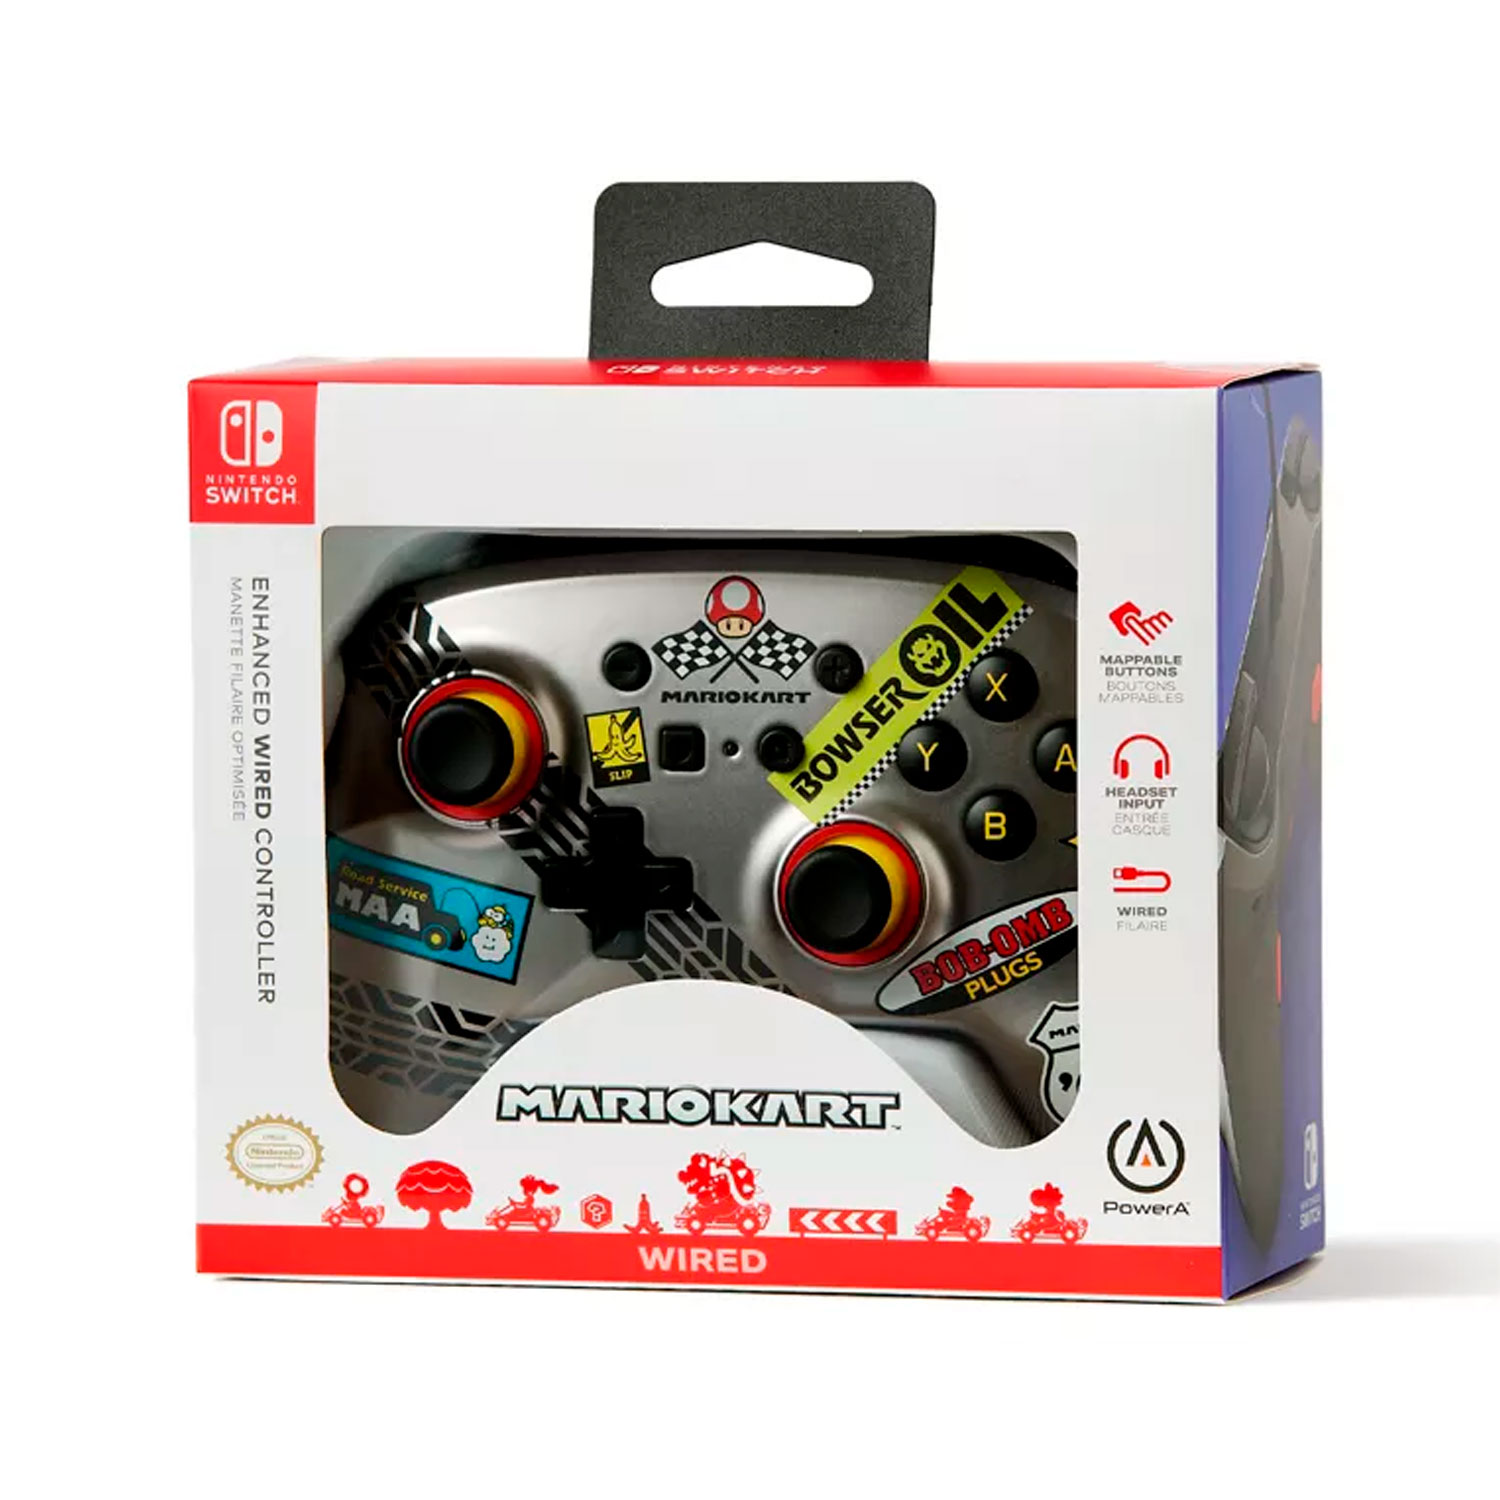 Controle PowerA Enhanced Wired para Nintendo Switch - Mario Kart (PWA-A-05091)